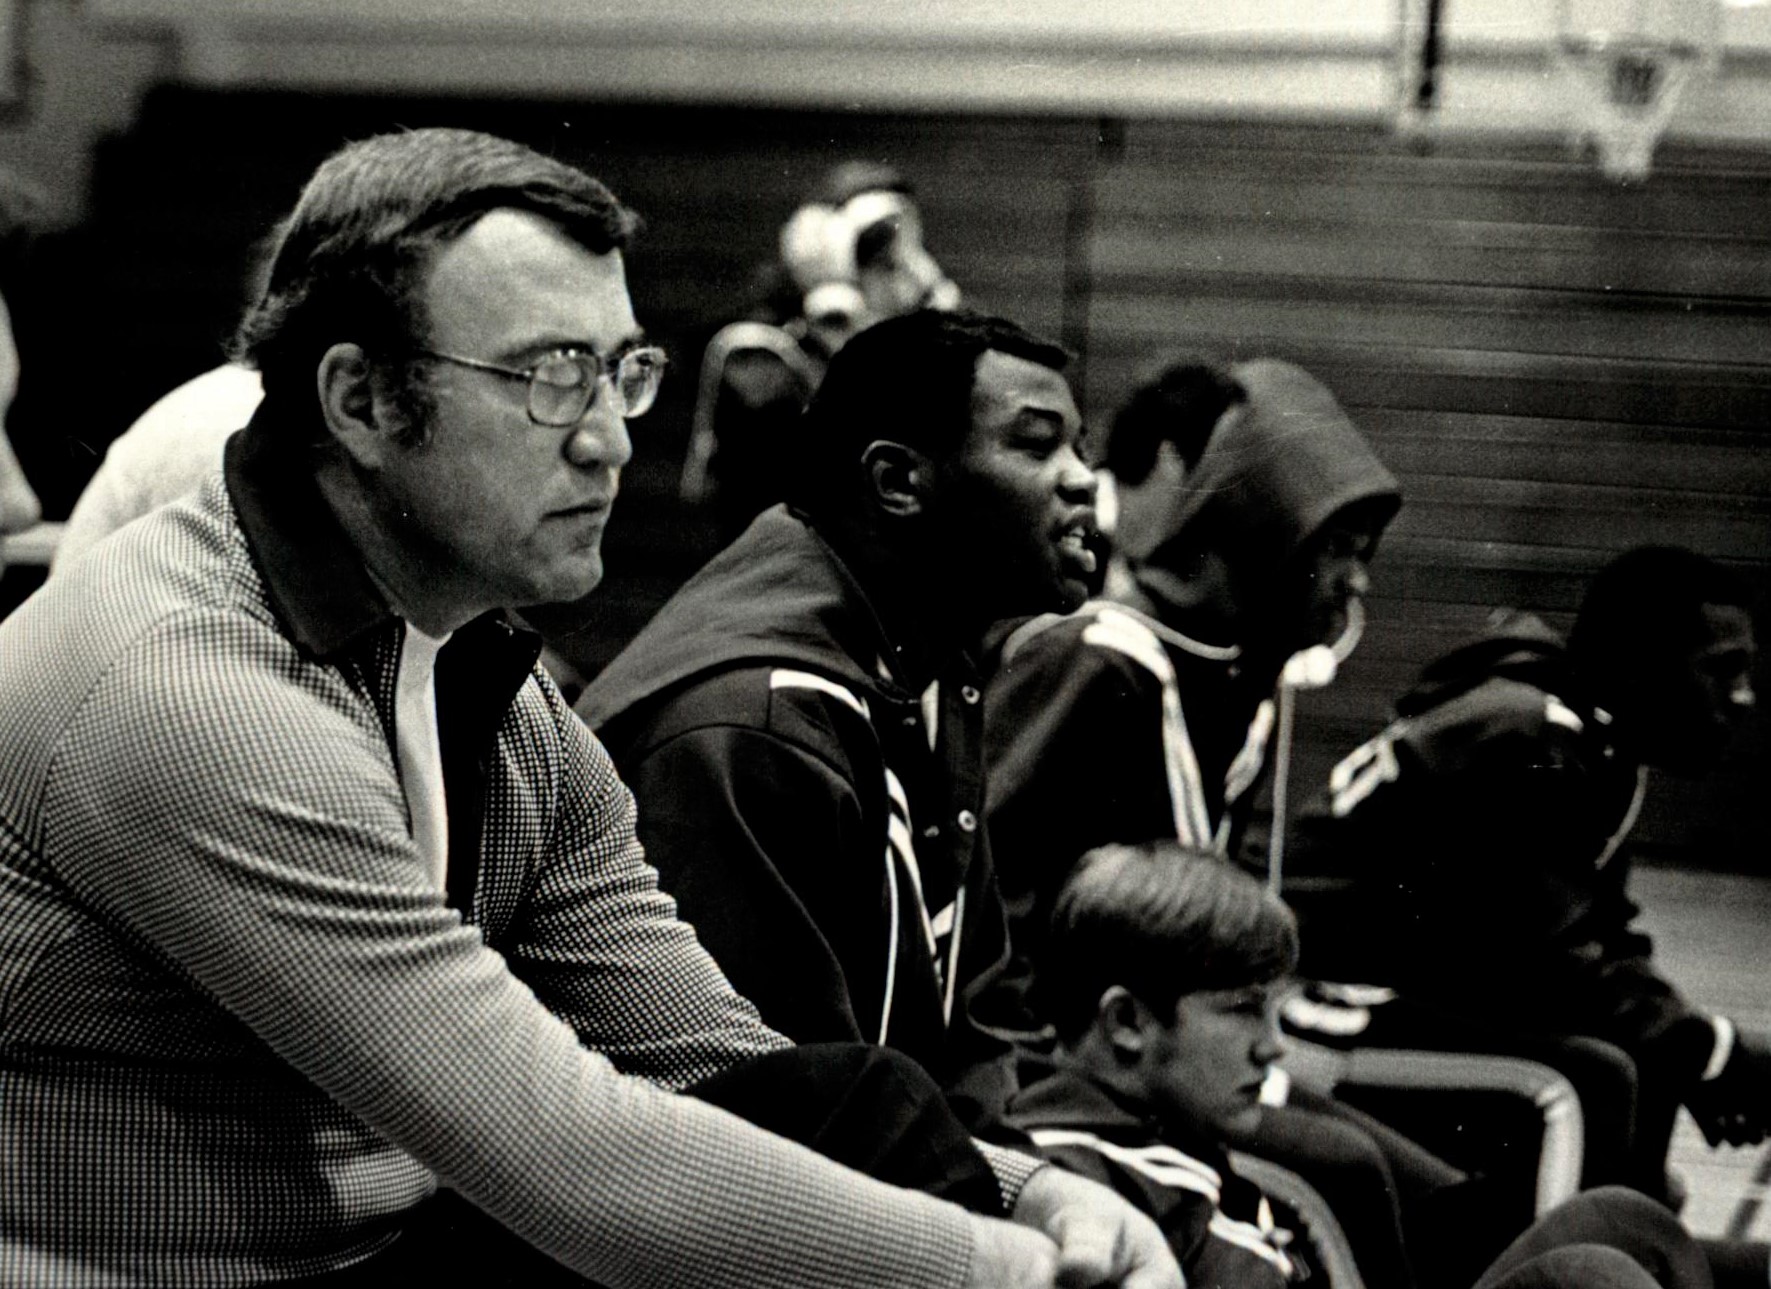 Coach Pillard with former team